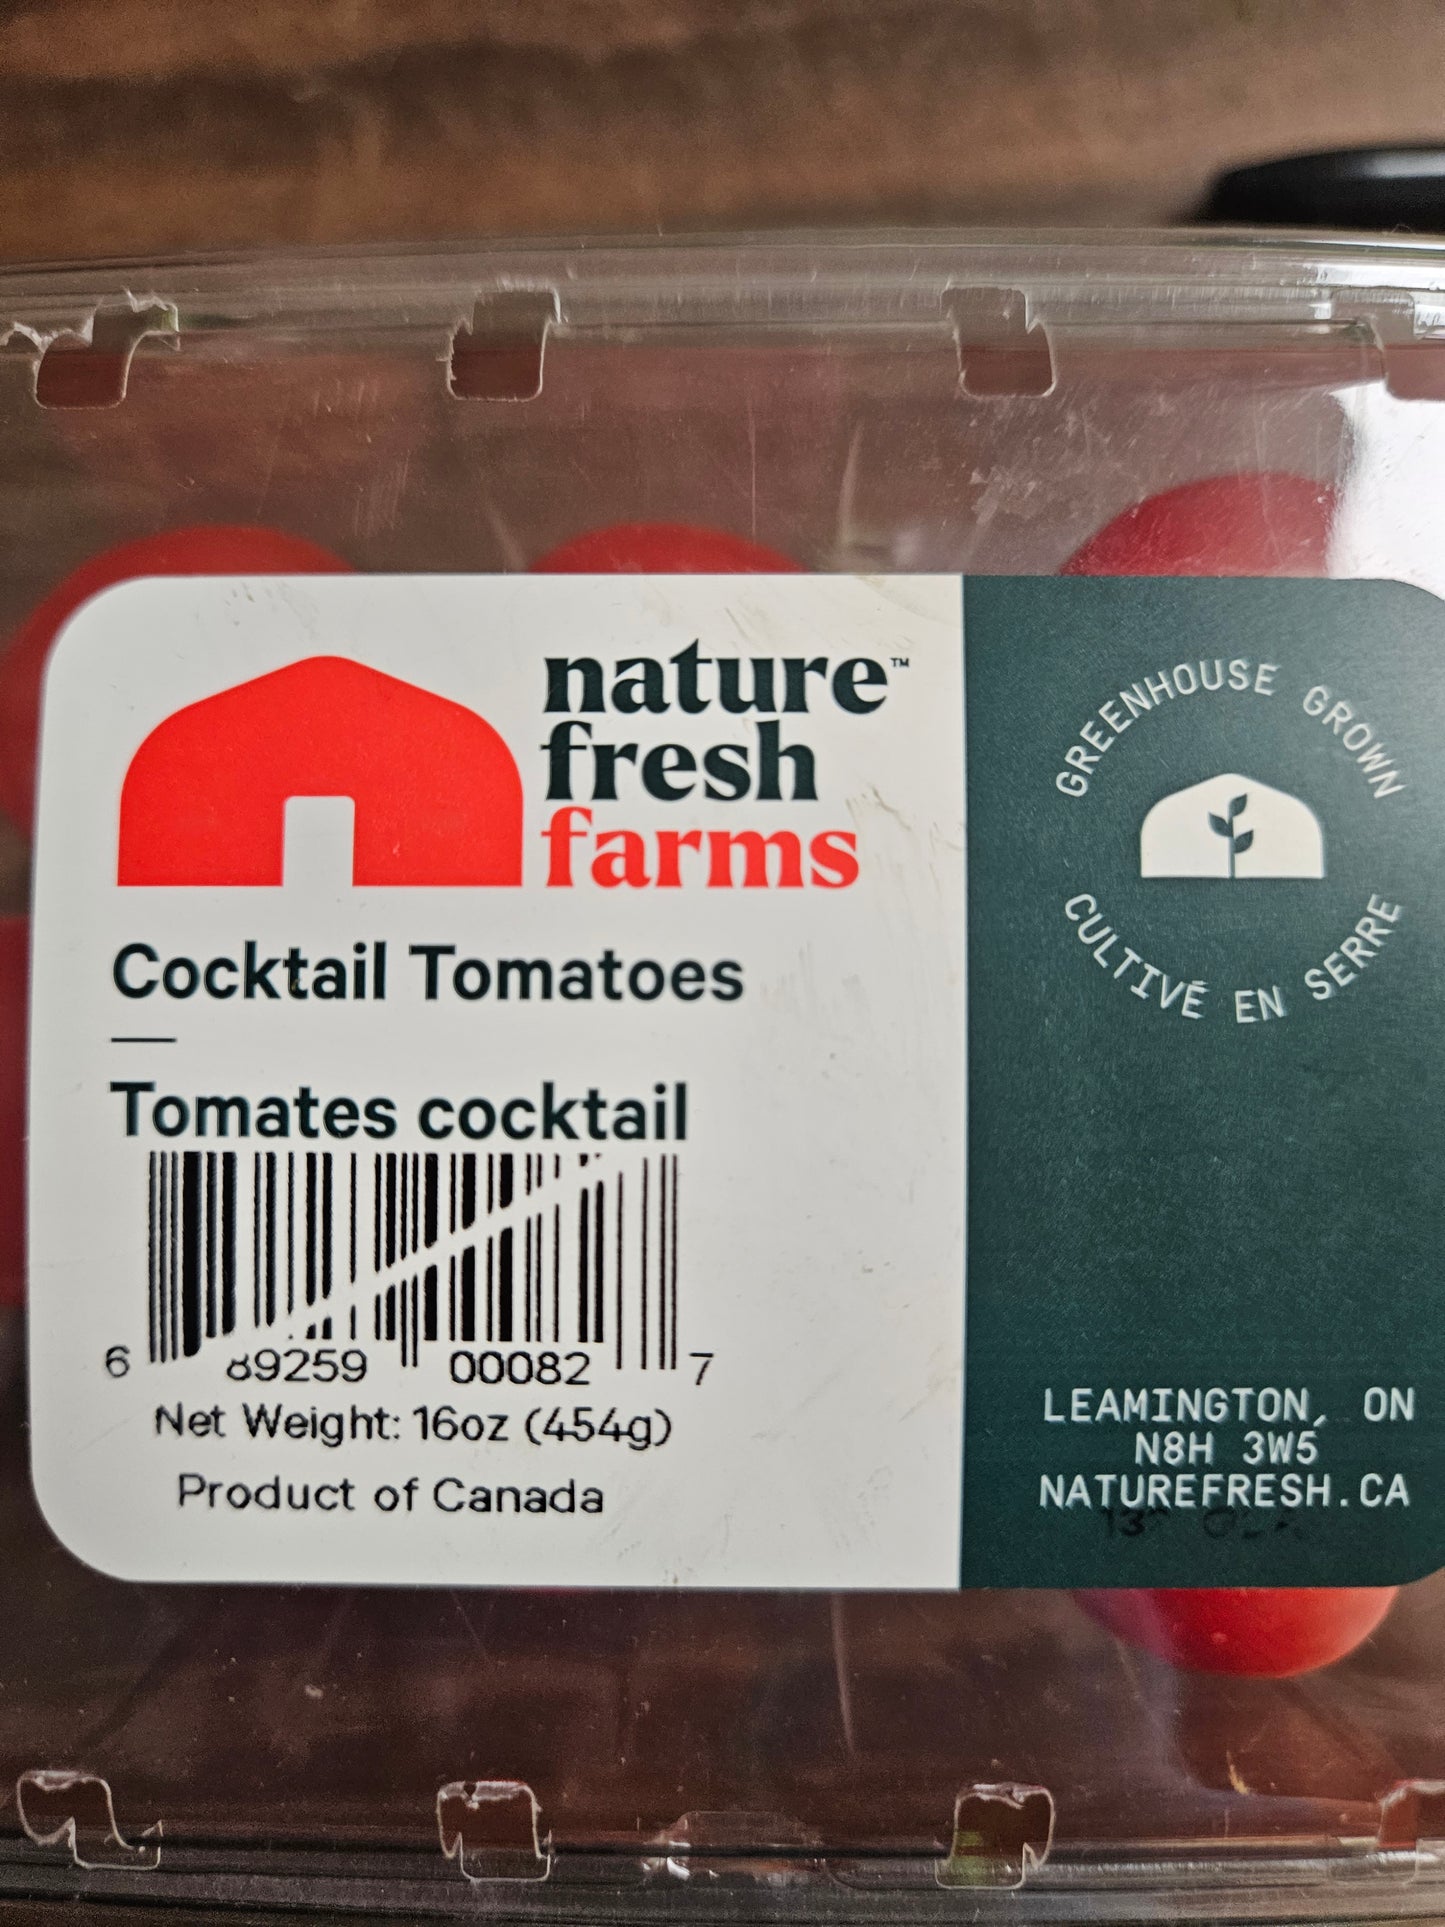 Tomatoes - Variety